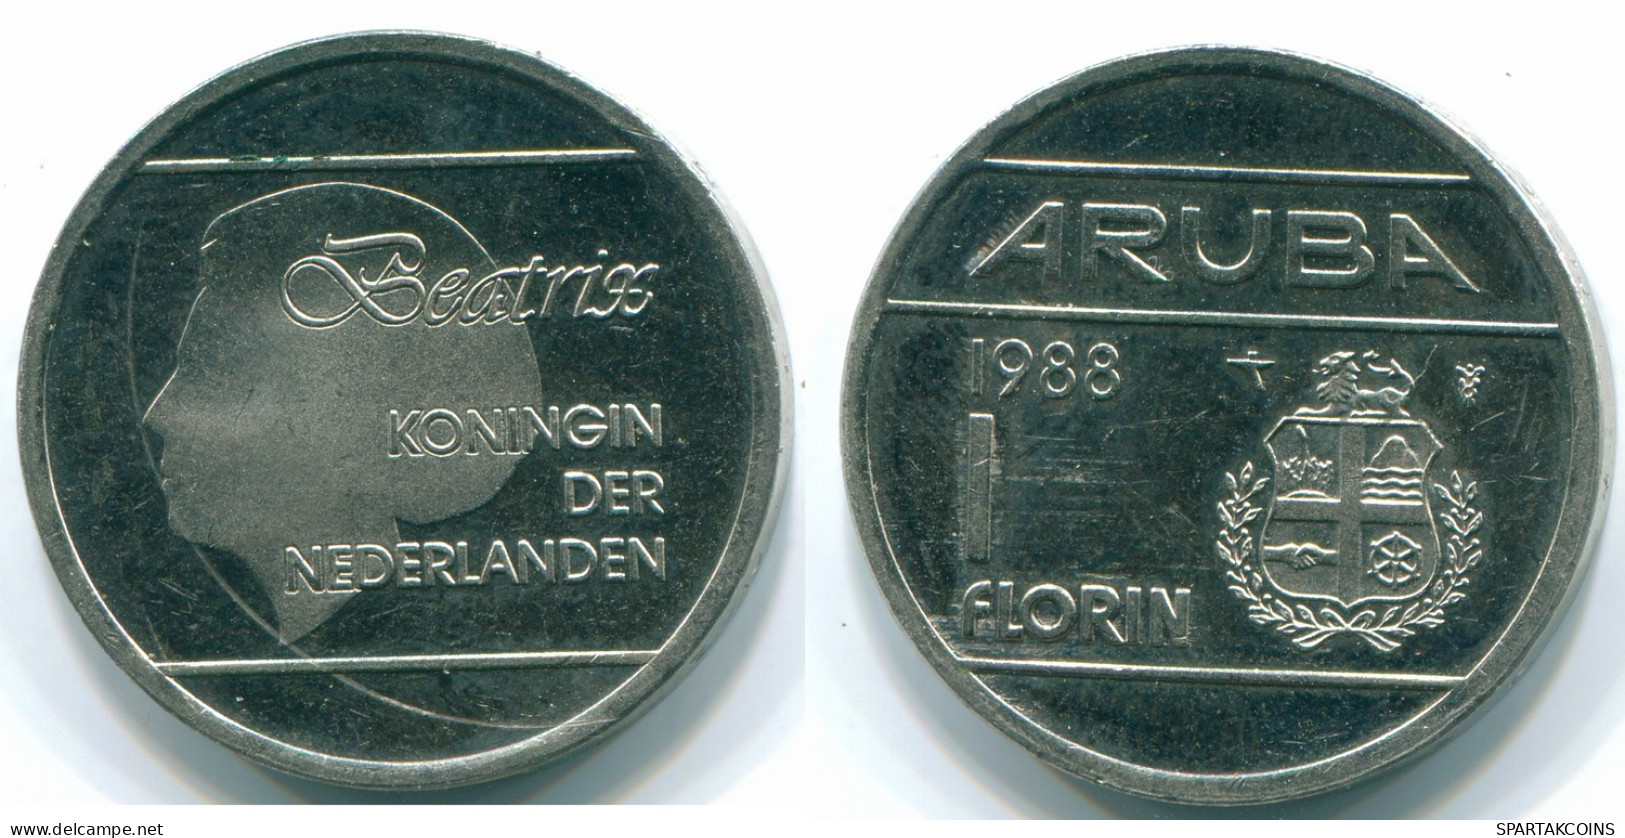 1 FLORIN 1986 ARUBA (NÉERLANDAIS NETHERLANDS) Nickel Colonial Pièce #S13650.F - Aruba